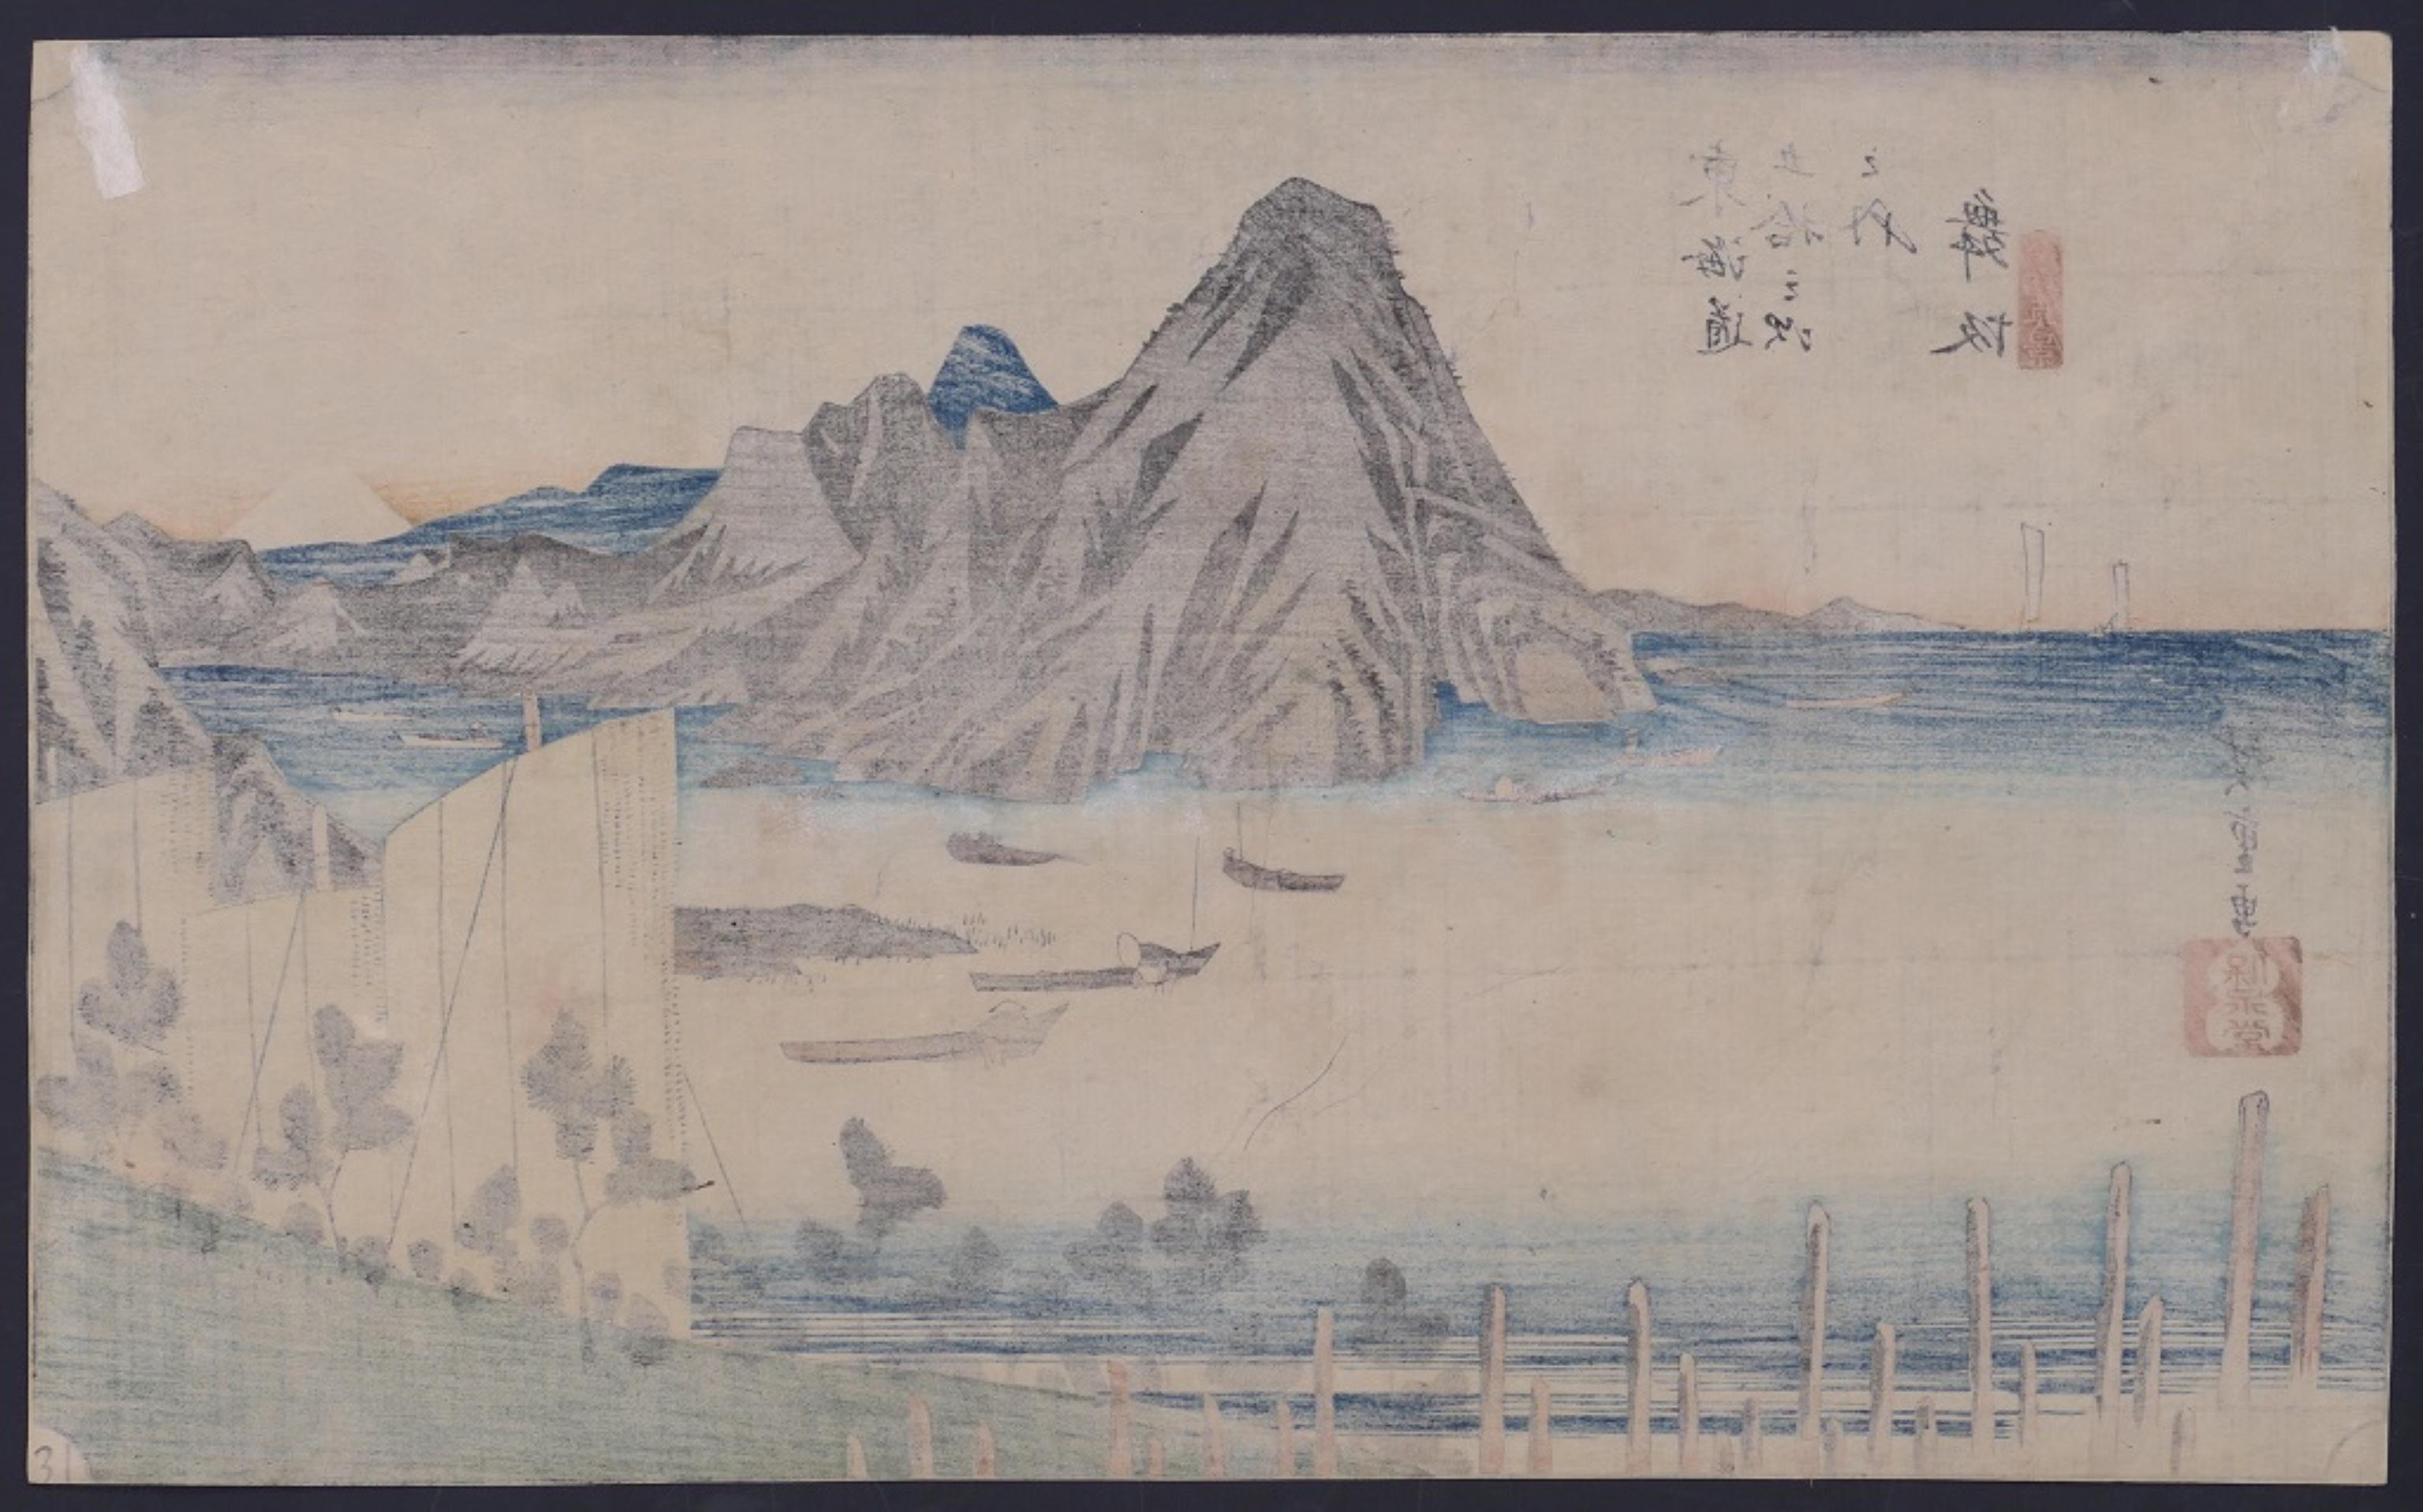 Maisaka, Imagiri Shink - Orignal Woodcut by Utagawa Hiroshige - 1833 ca 4